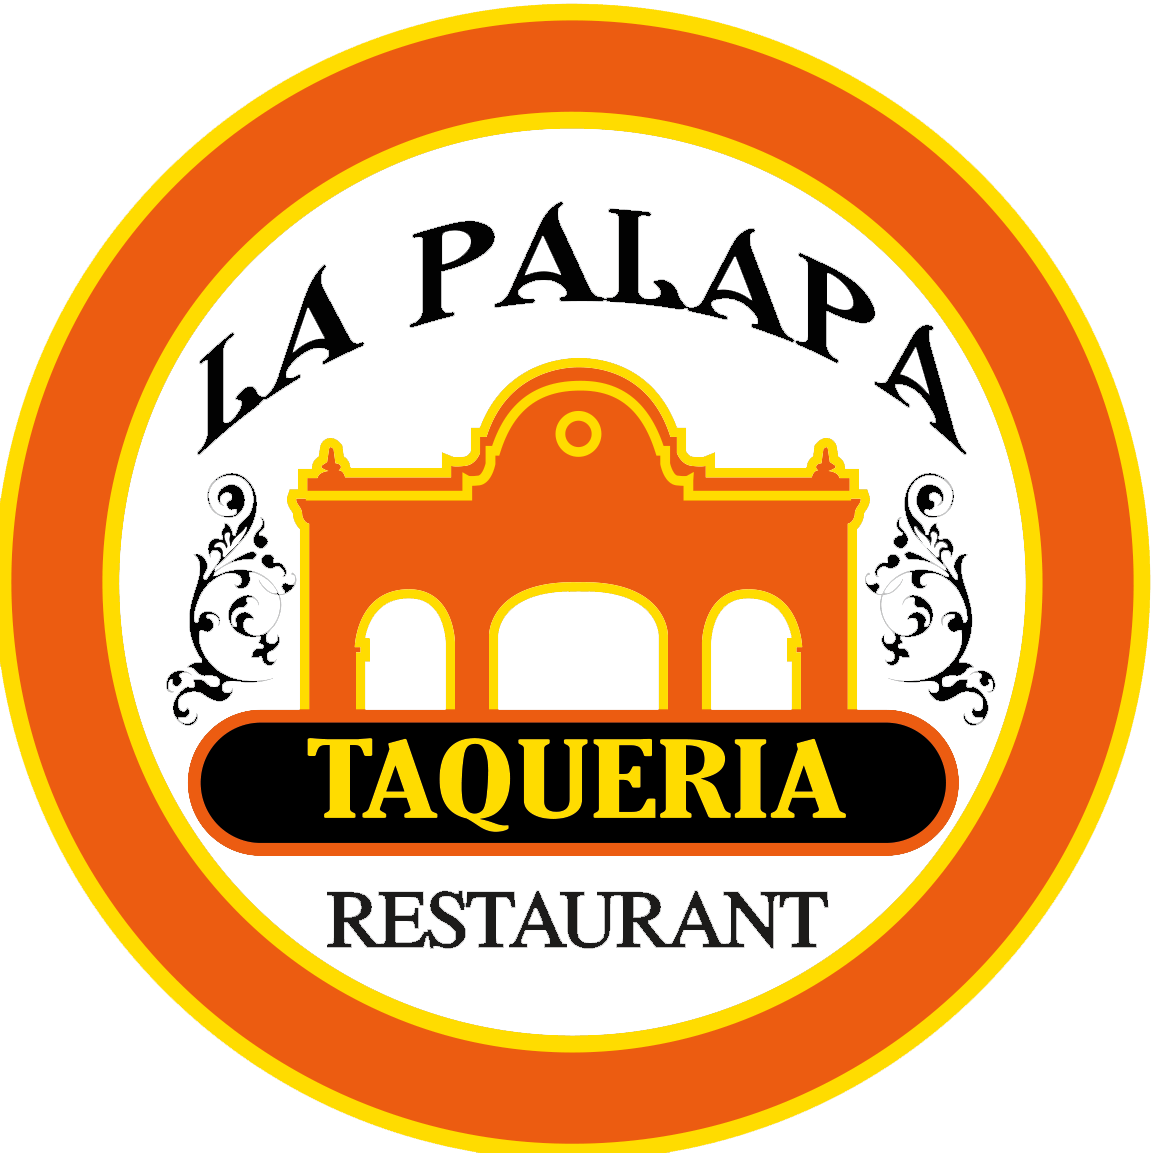 Taqueria El Parian logo